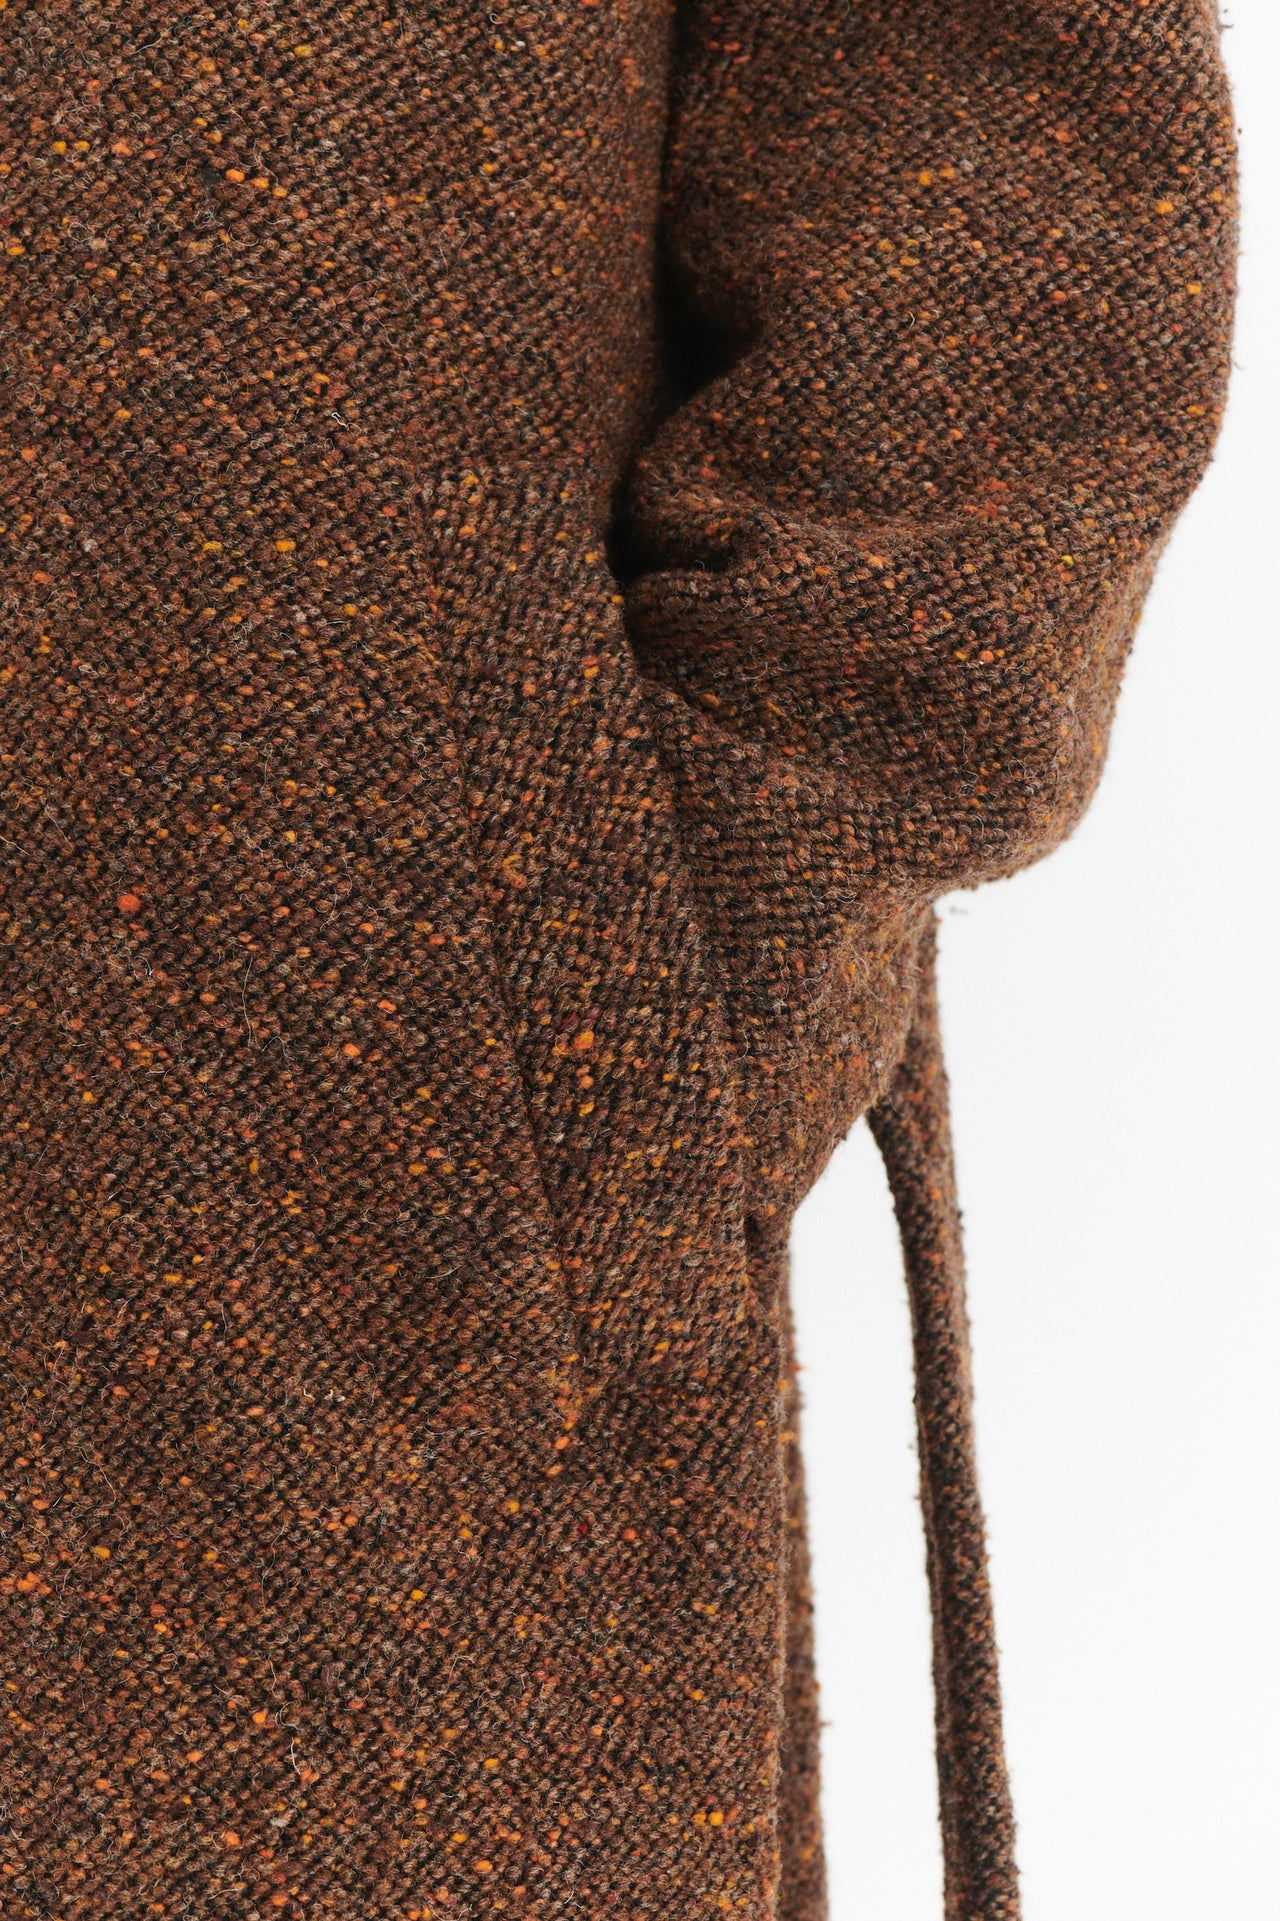 Raglan Coat in a Brown and Orange Italian Virgin Wool with MEIDA Thermo Insulation